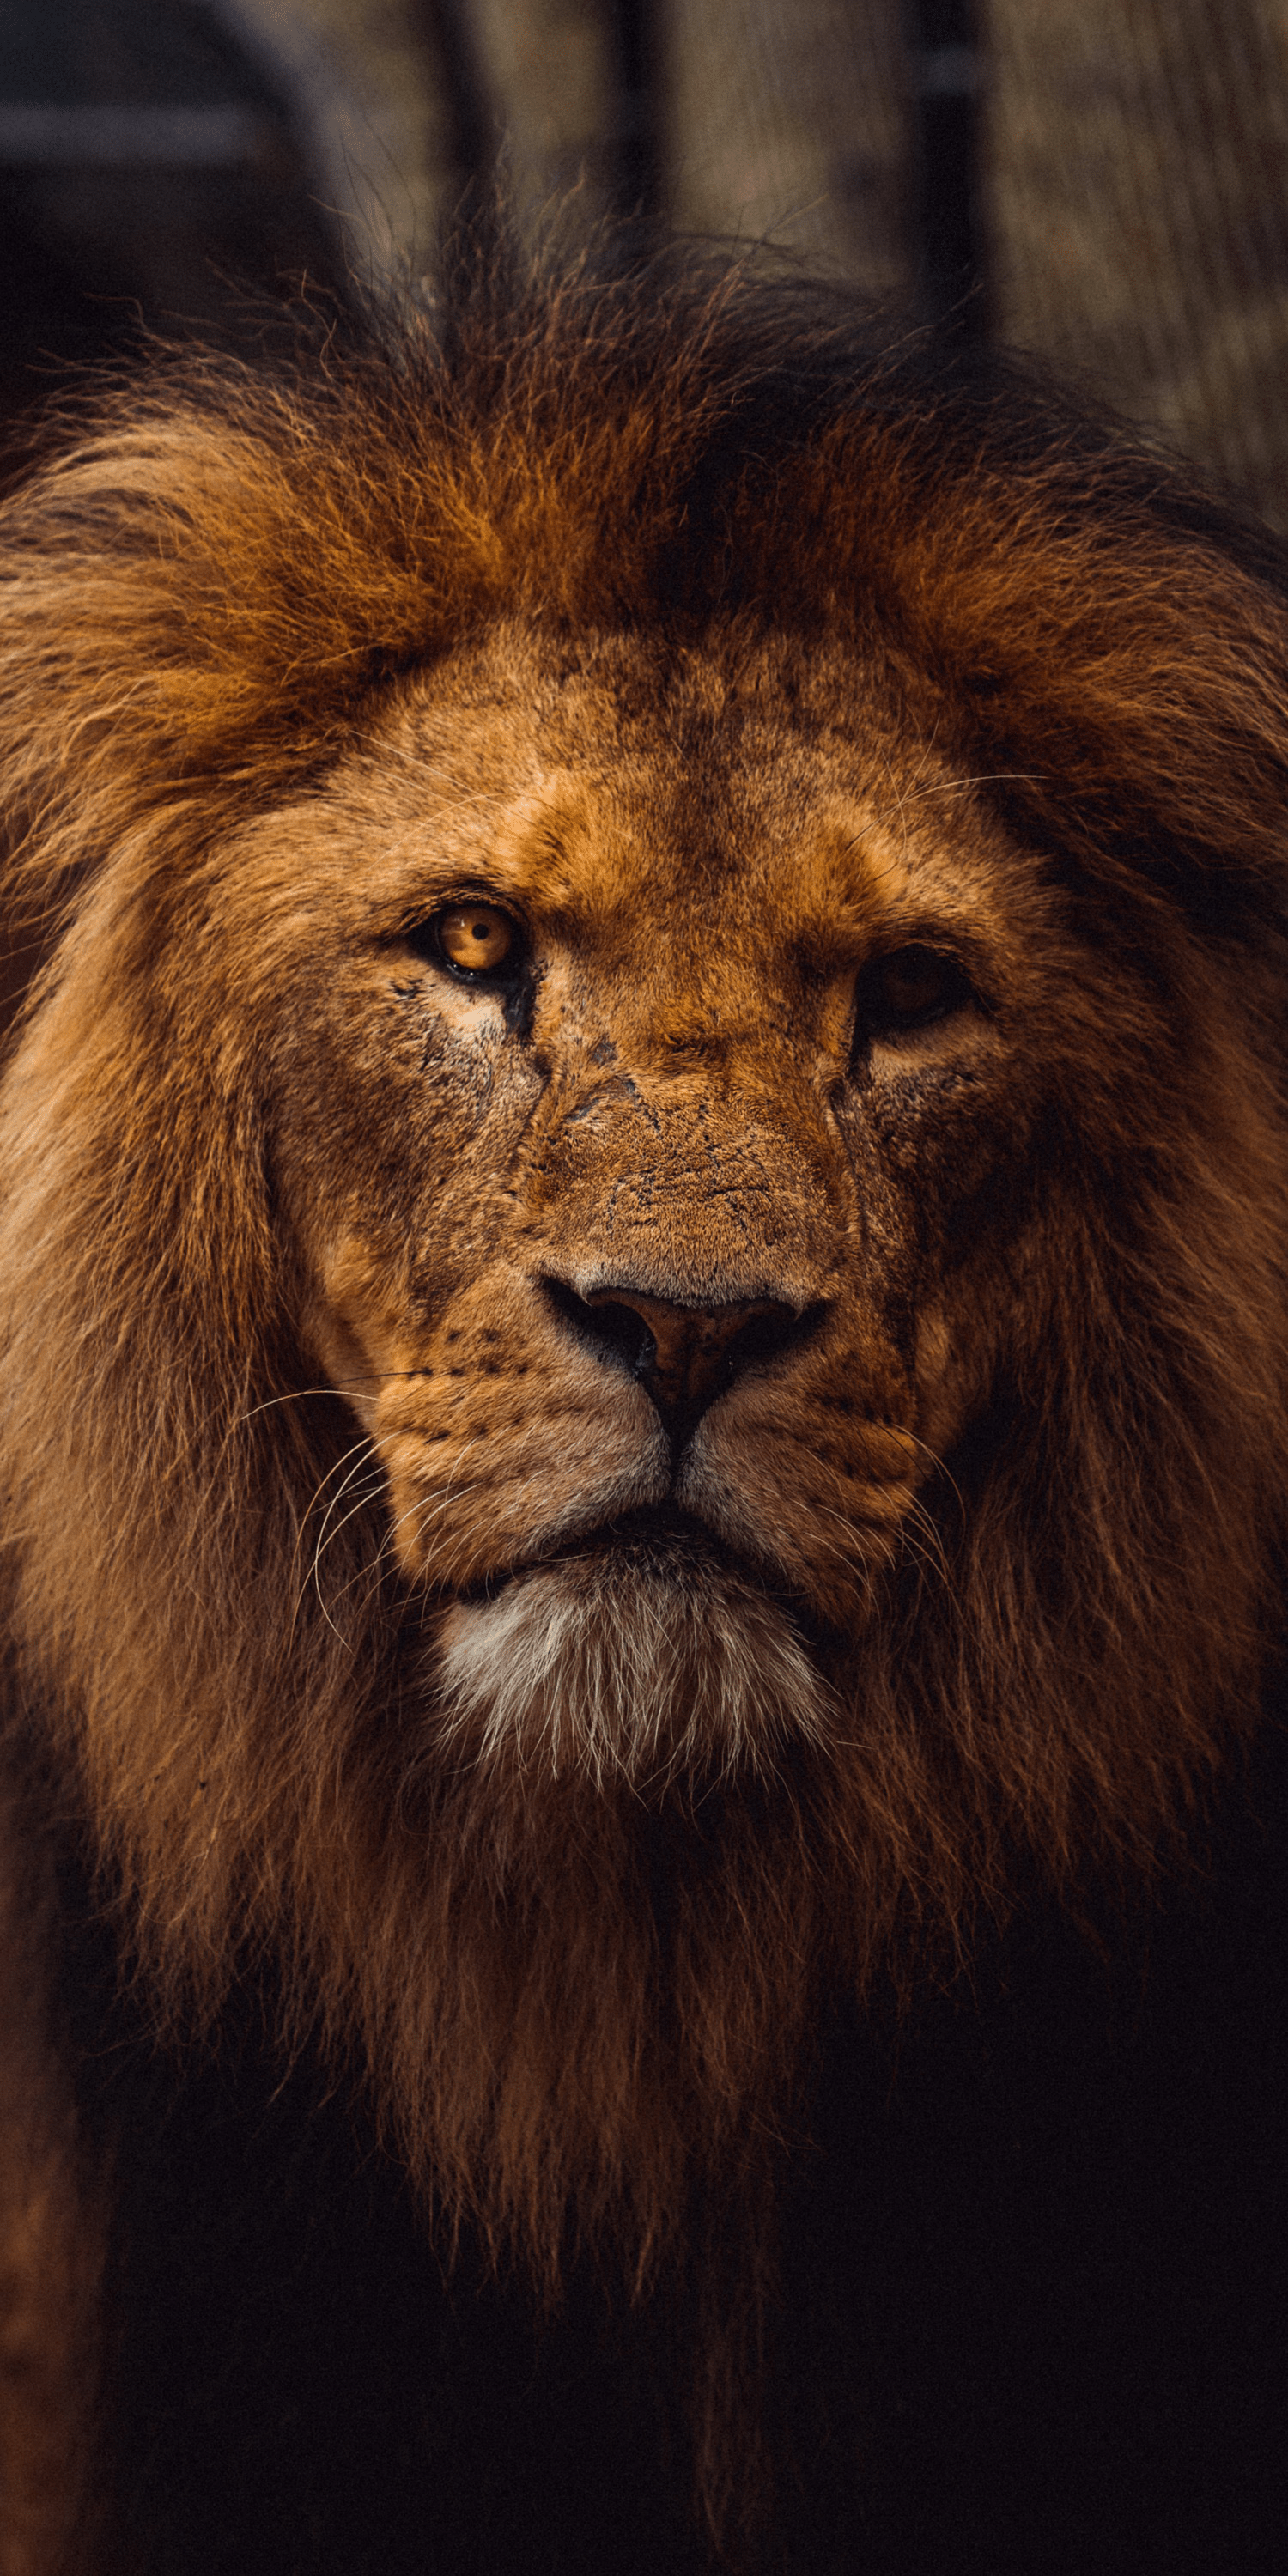 Lion Wallpaper, HD Lion Background, Free Image Download